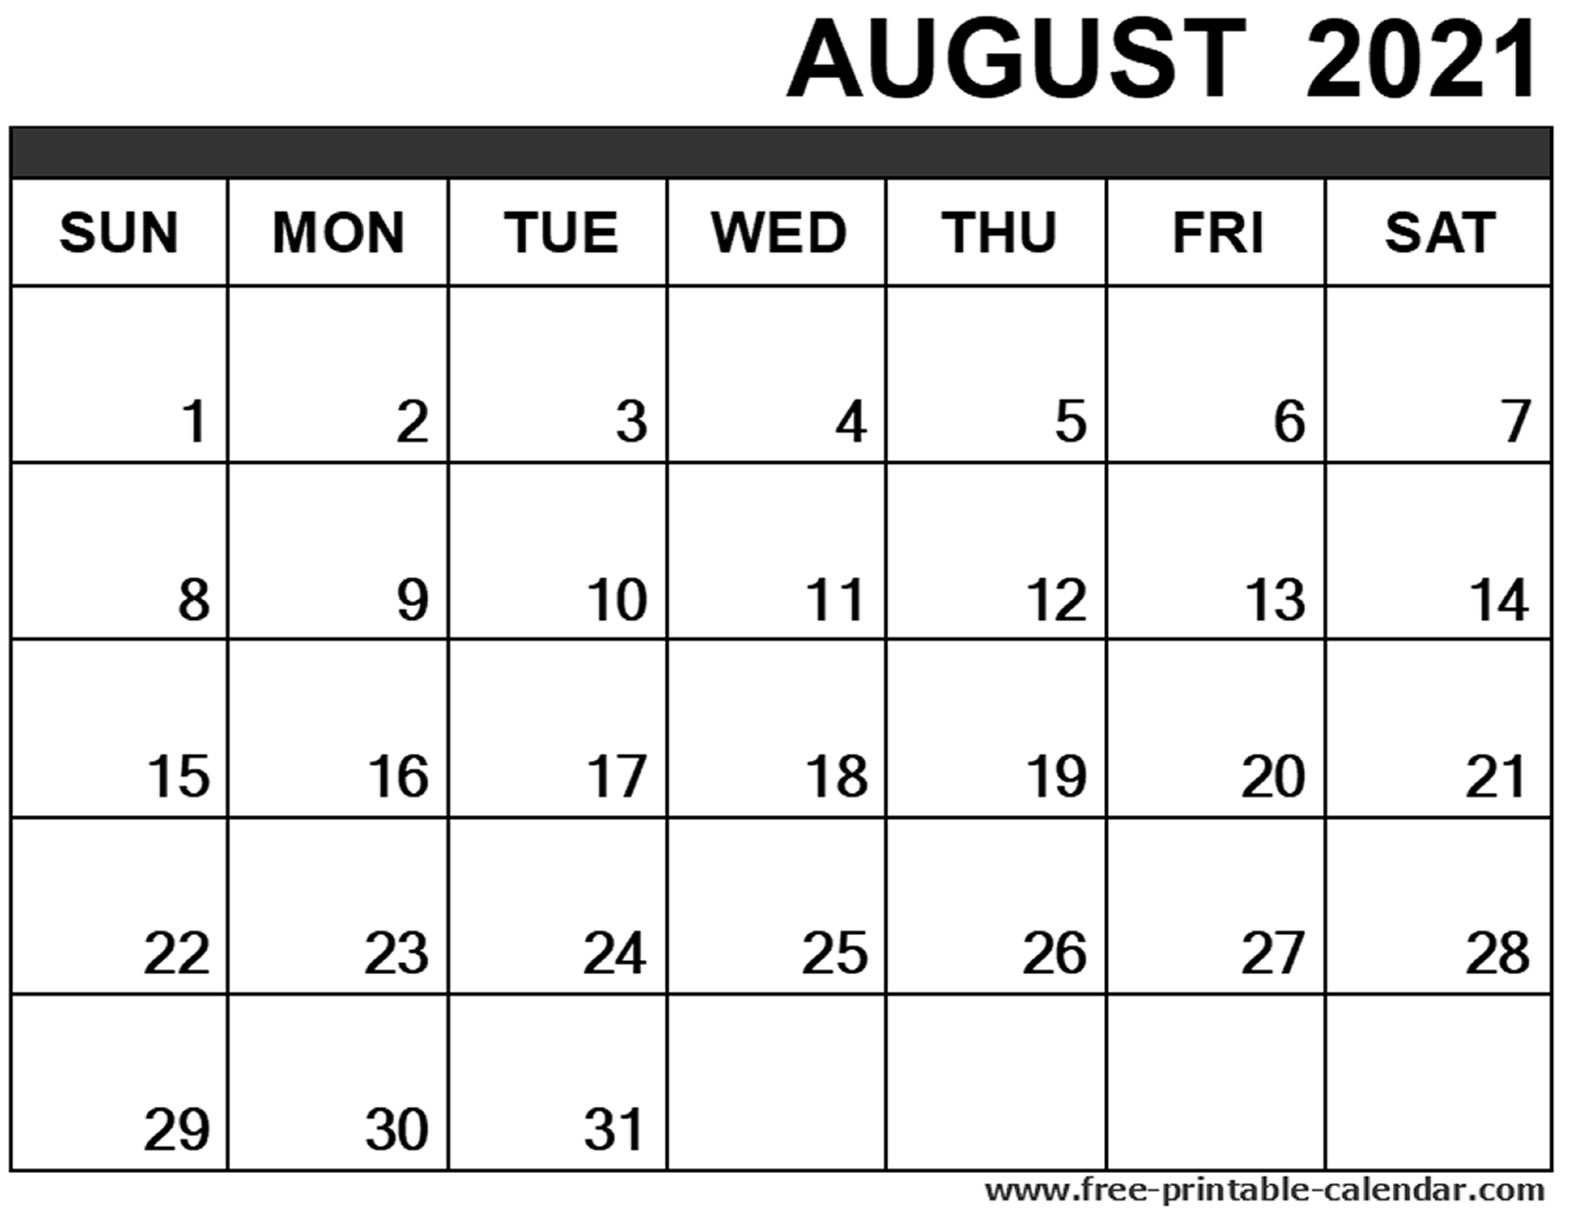 August 2021 Calendar Printable - Free-Printable-Calendar-Printable Calendar 2021 Monthly That Can Be Edited